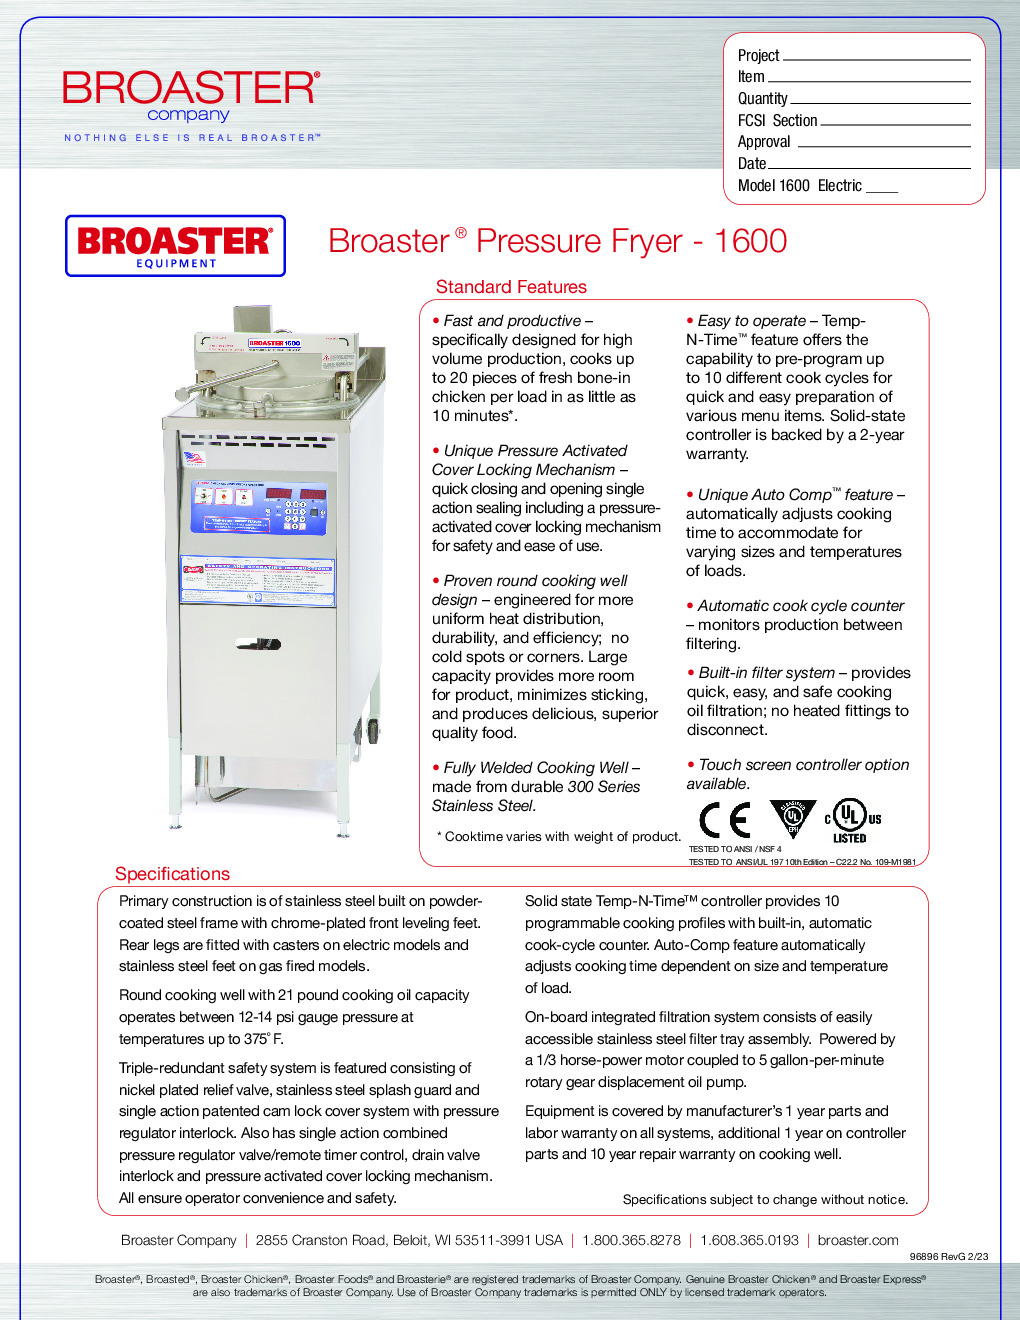 Broaster 85785 1600 Series Electric Pressure Fryer w/ Temp-N-Time Controller, Built-In Filter